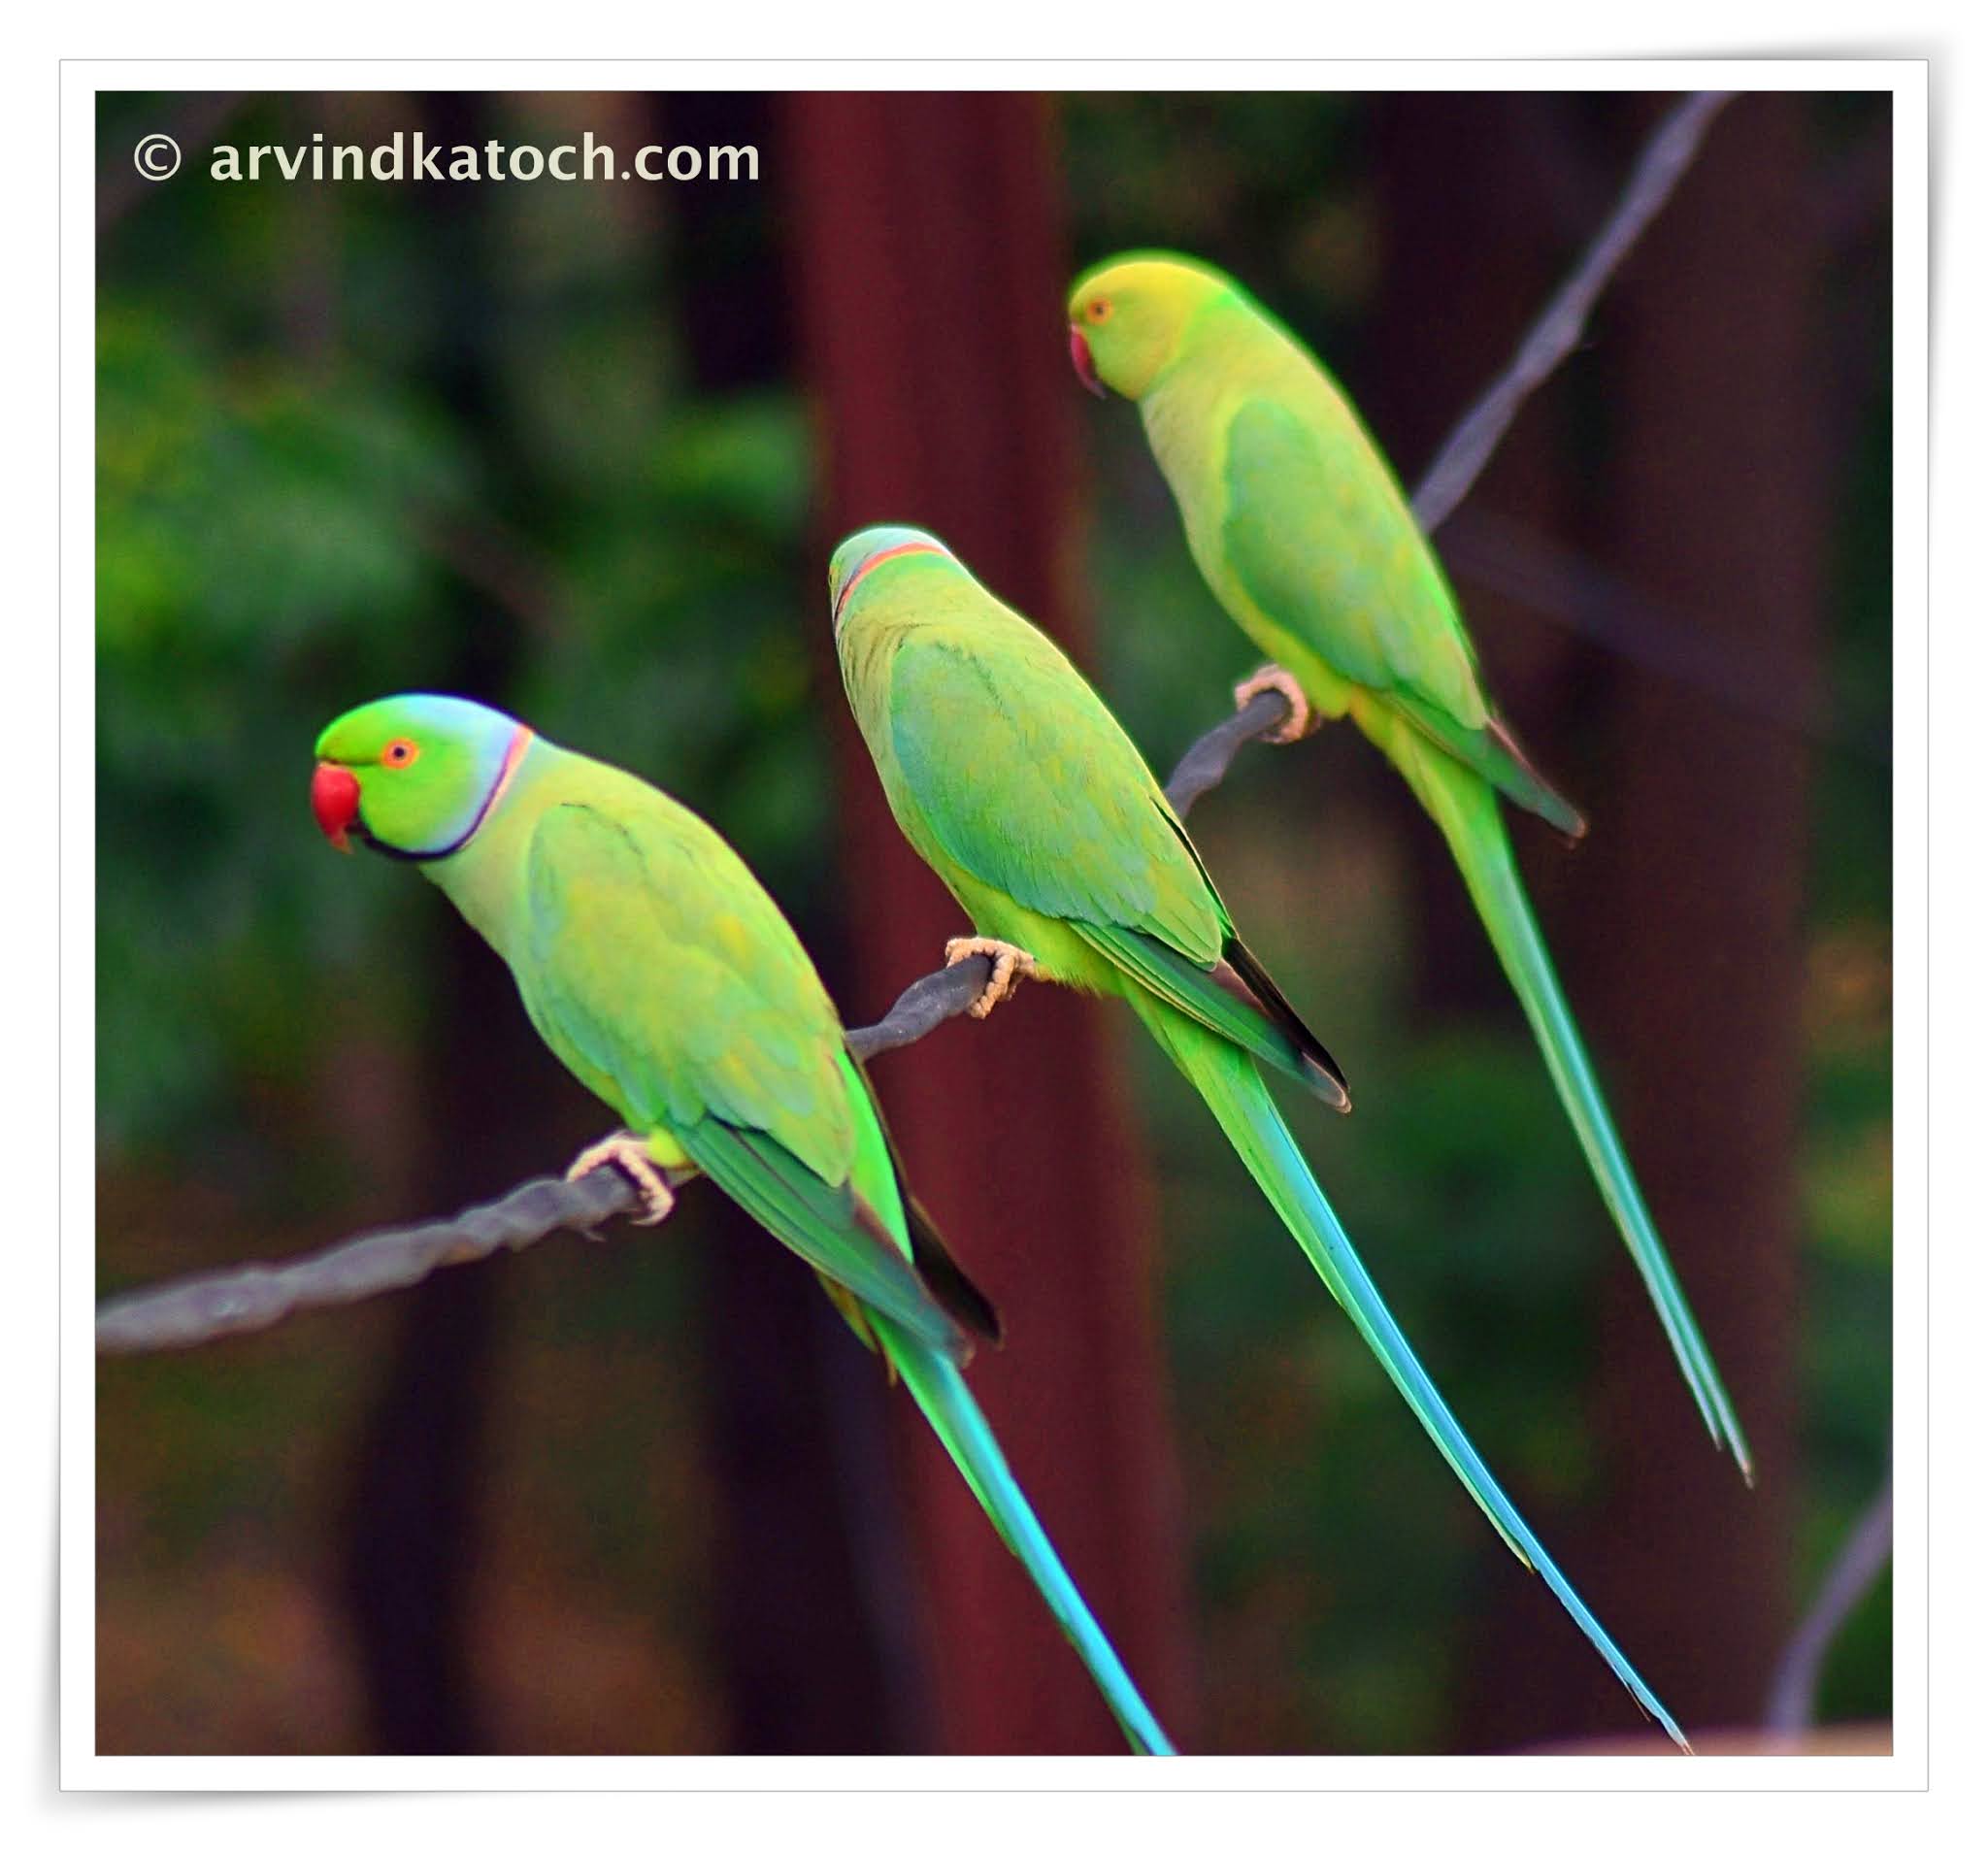 Birds of India | Bird World: Rose-ringed parakeet